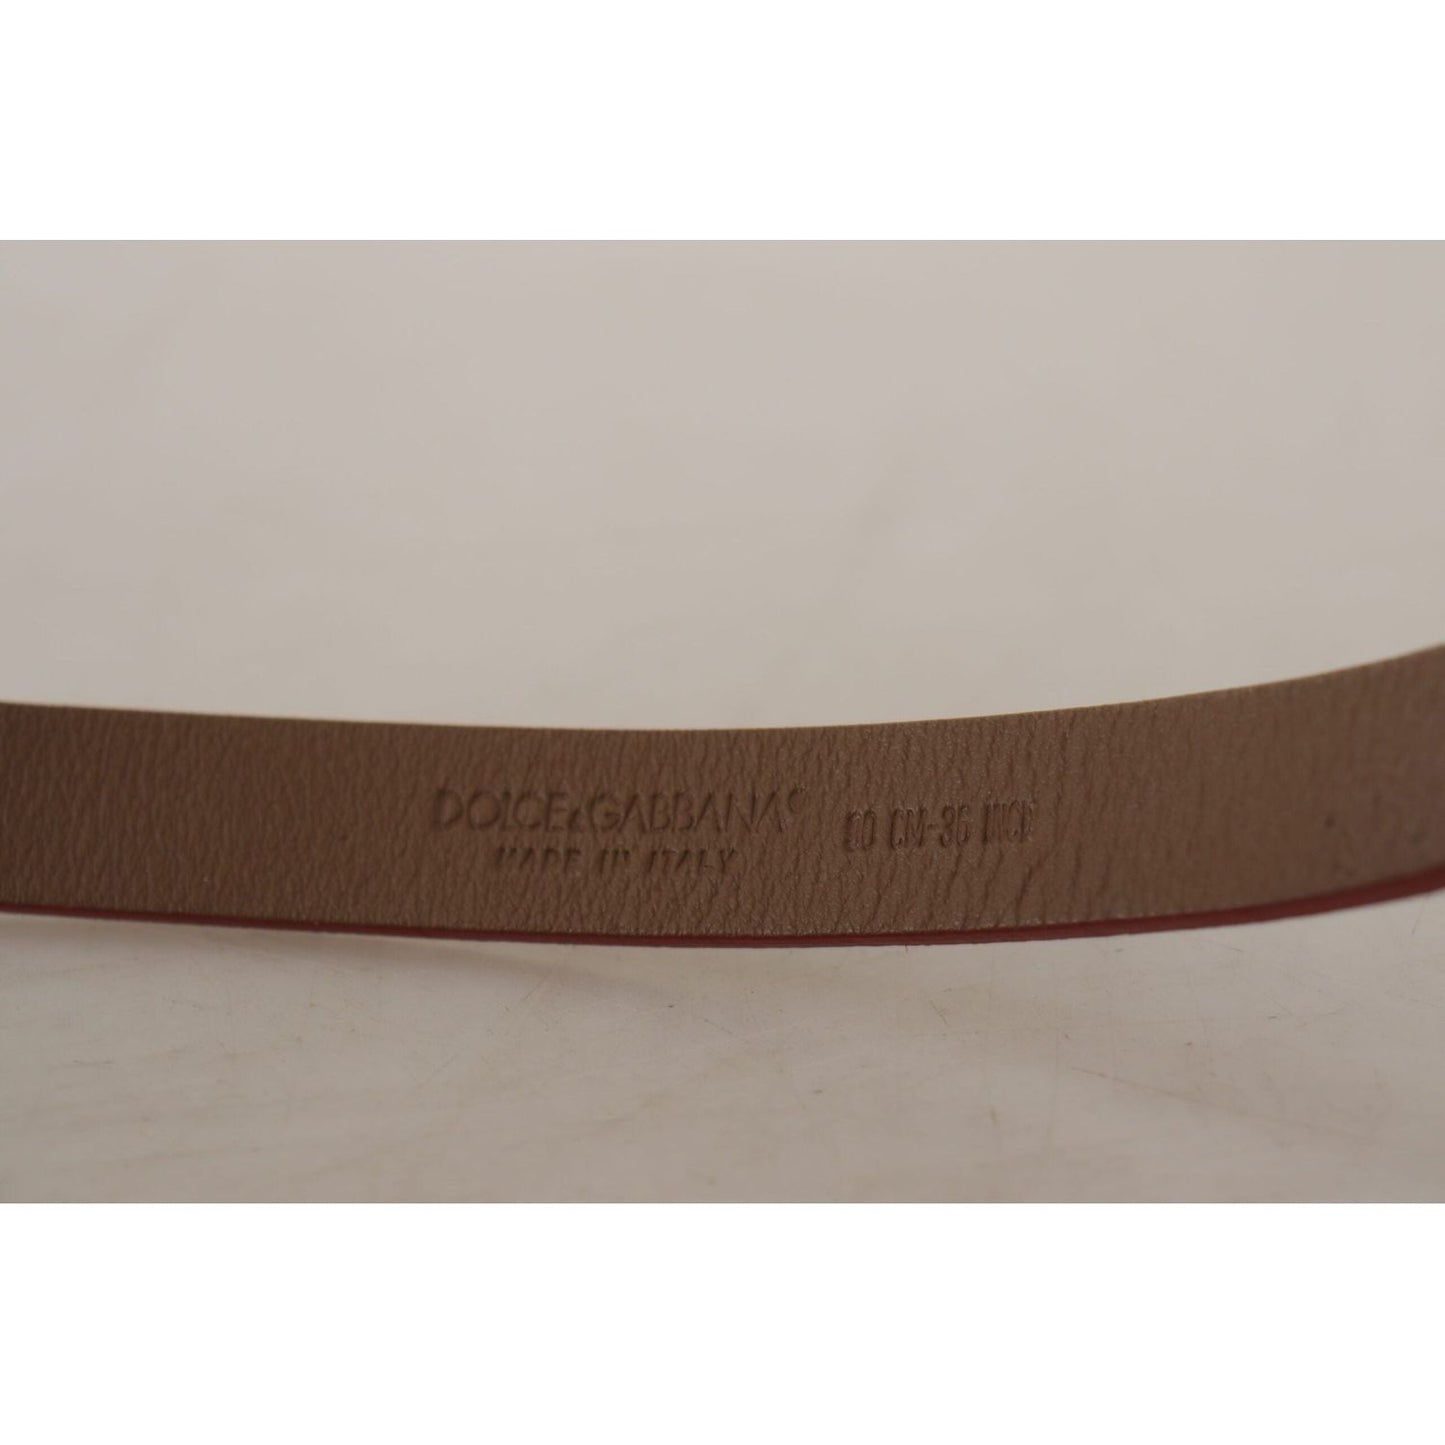 Dolce & Gabbana Chic Suede Belt with Logo Engraved Buckle brown-logo-engraved-metal-waist-buckle-belt IMG_8695-scaled-3469b538-50b.jpg